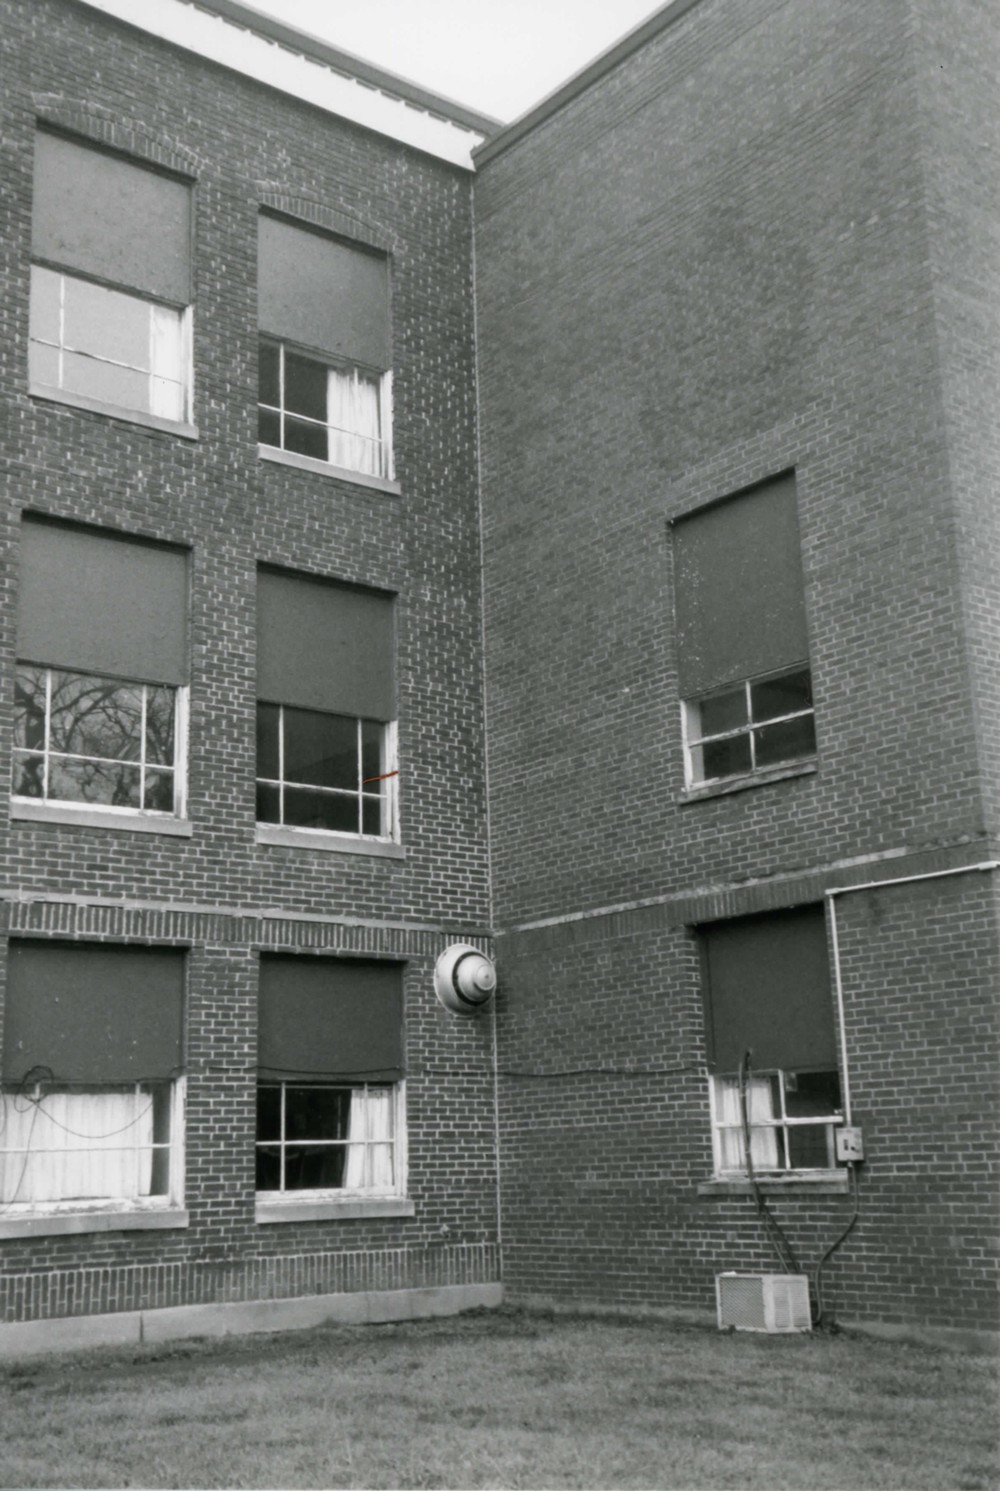 Springfield Township School, Ontario Ohio Original building/addition seam (2002)